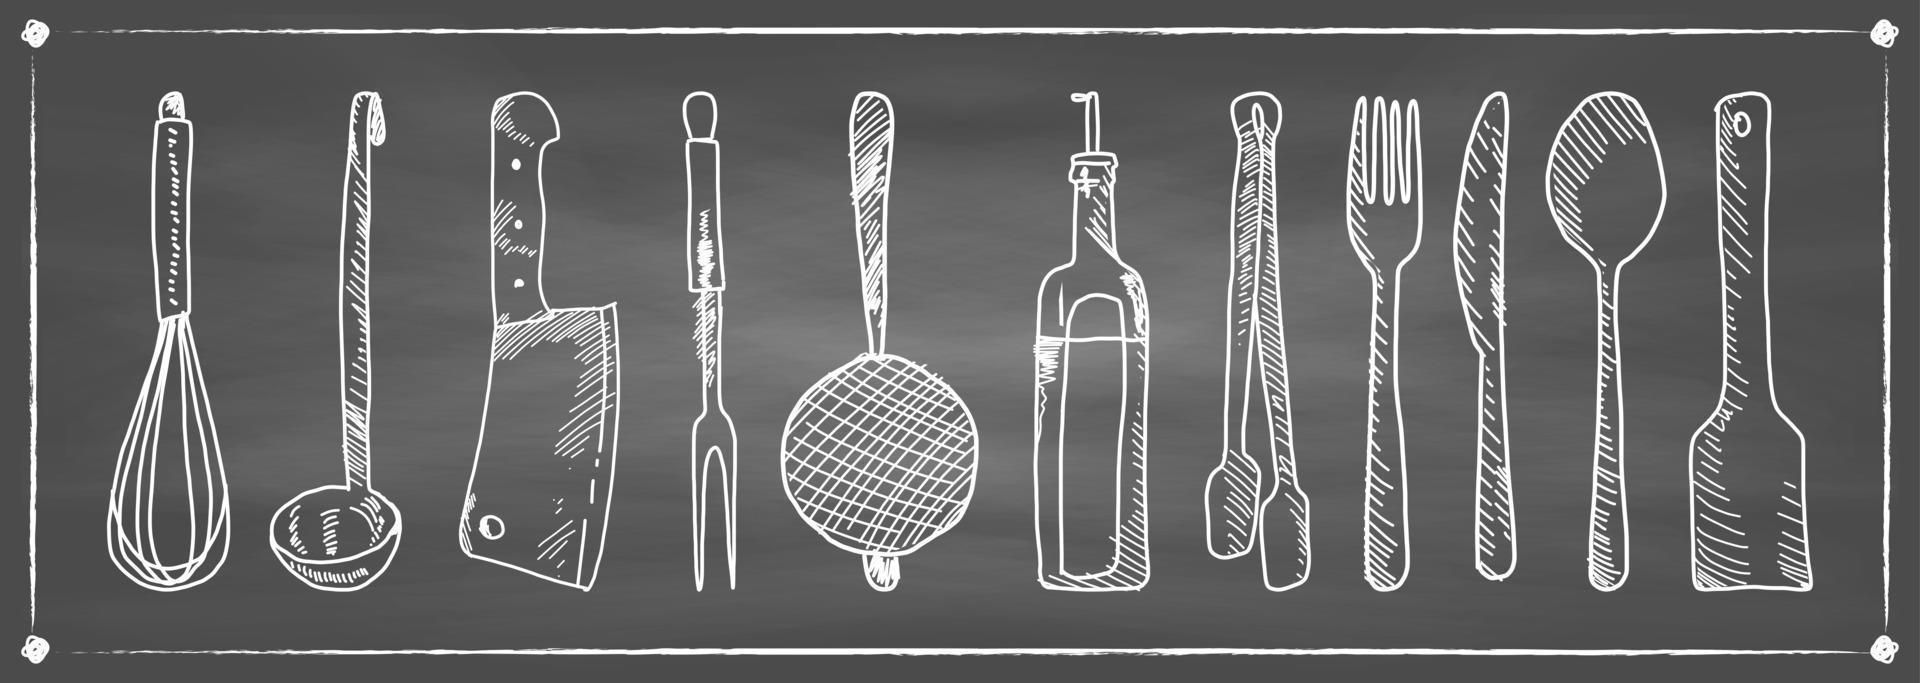 Hand drawn set of kitchen utensils on a chalkboard. vector